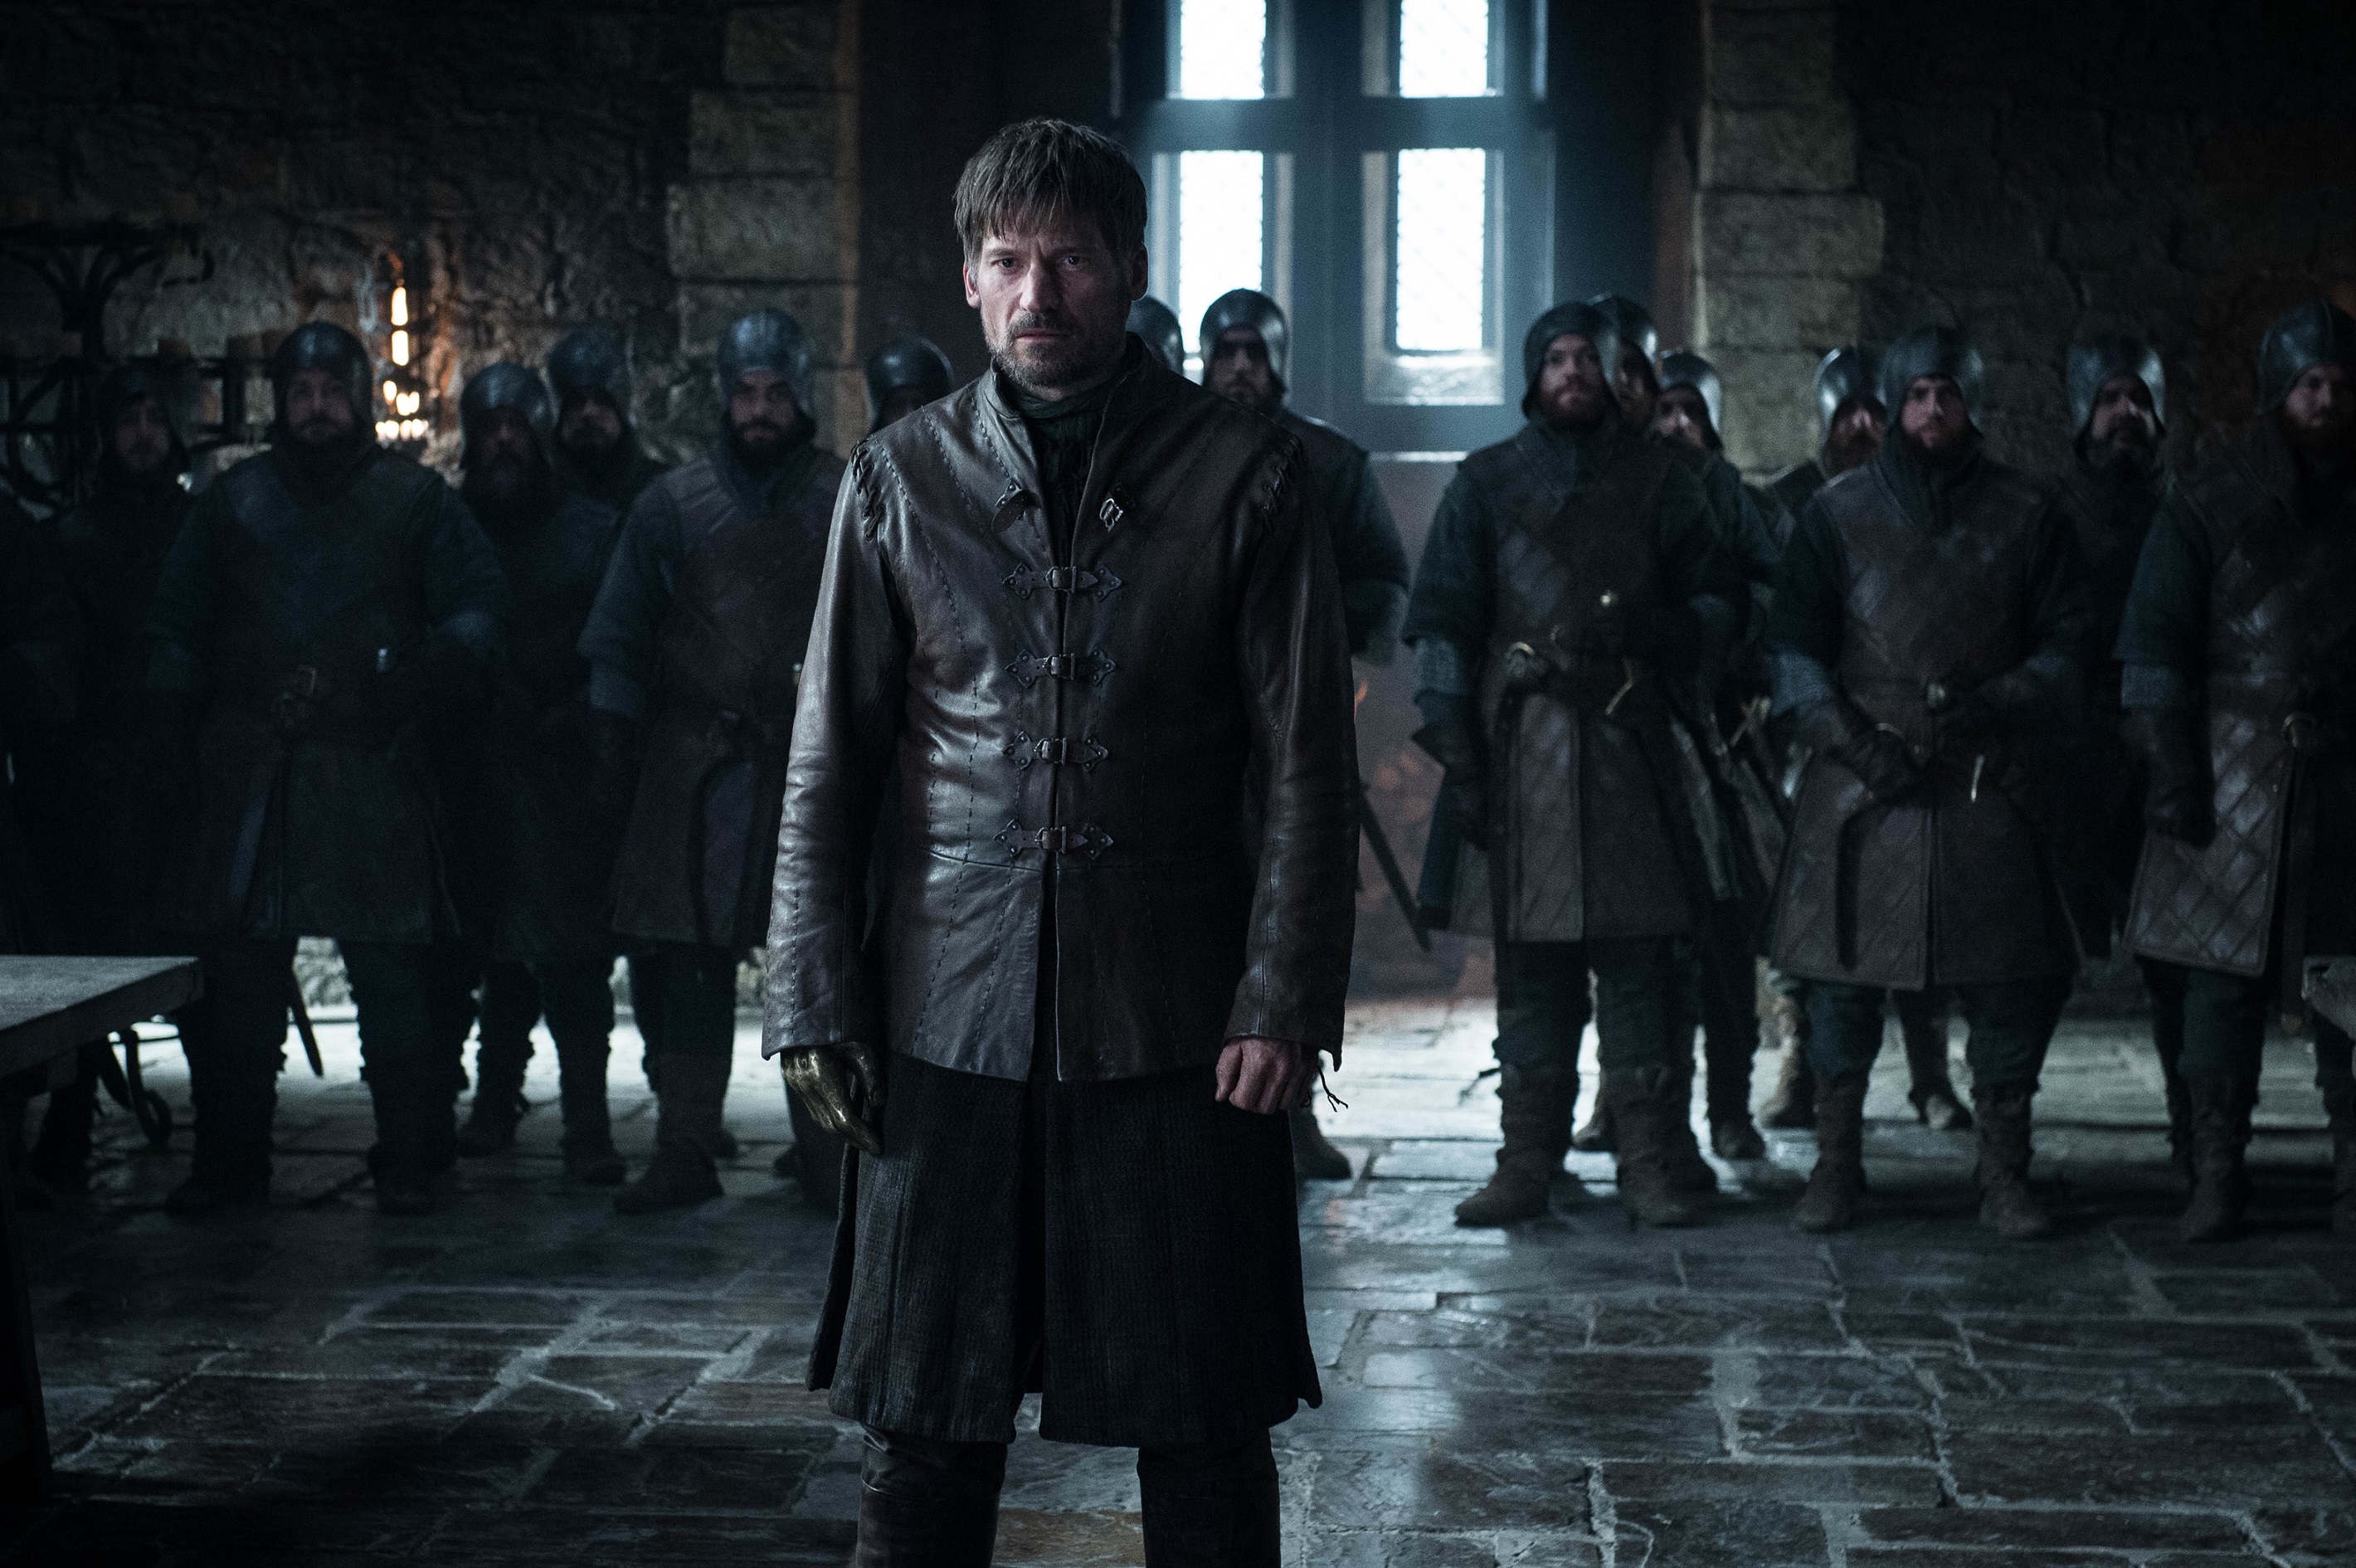 It looks like Jaime's trial will be quite tense. Will Brienne speak for him? Photo: Helen Sloan / HBO